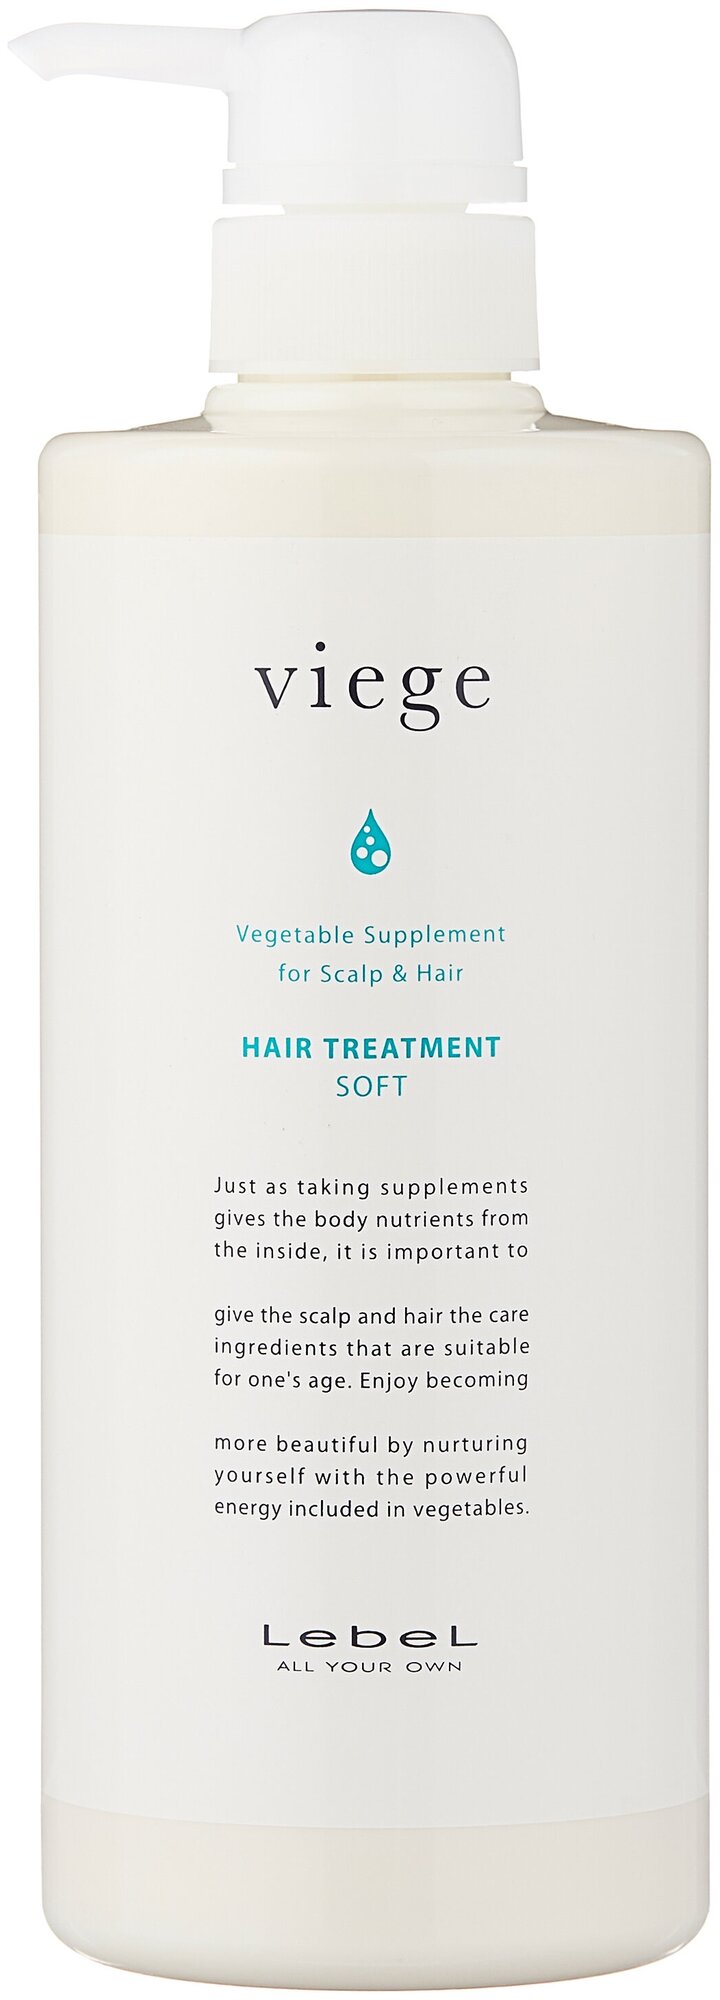 LebeL Маска для глубокого увлажнения волос Viege Treatment SOFT 600 мл 5666лп